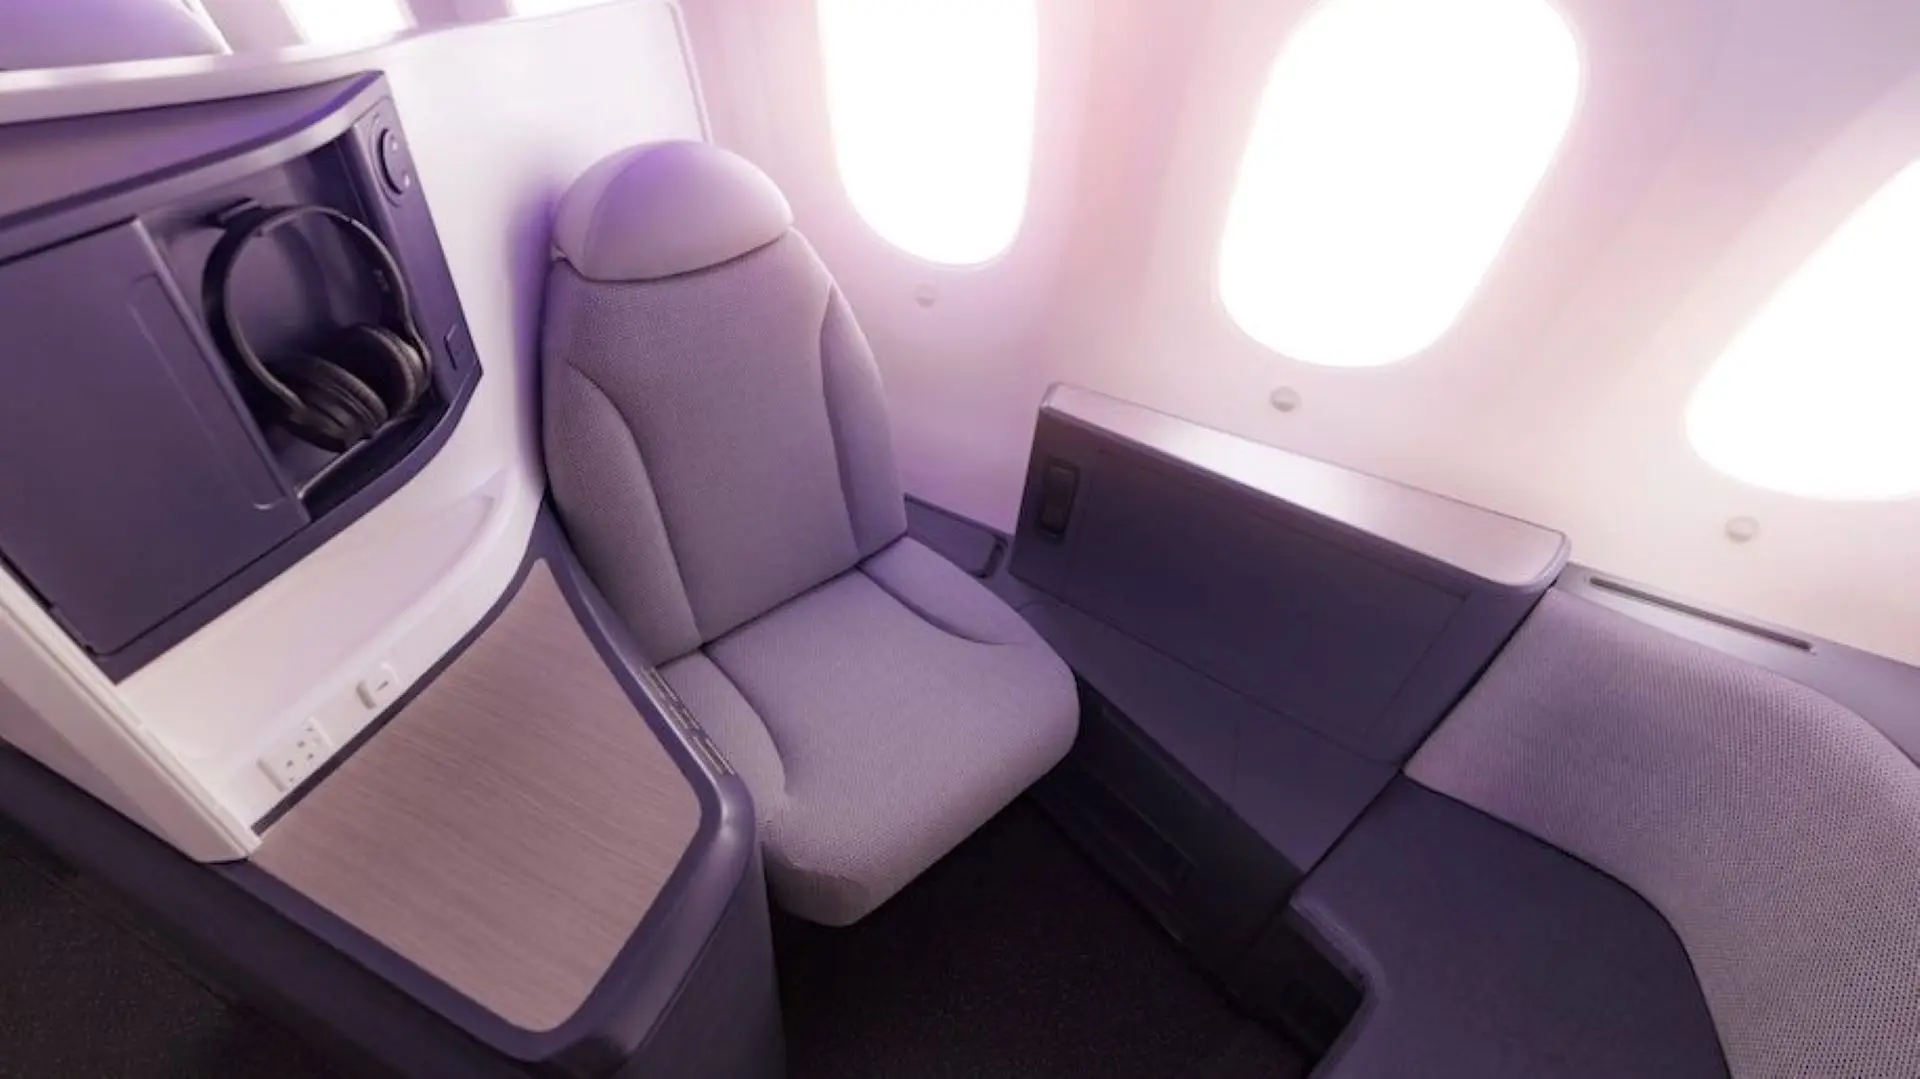 Airlines News - Air New Zealand’s new Dreamliner offers better sleep for Business Class passengers